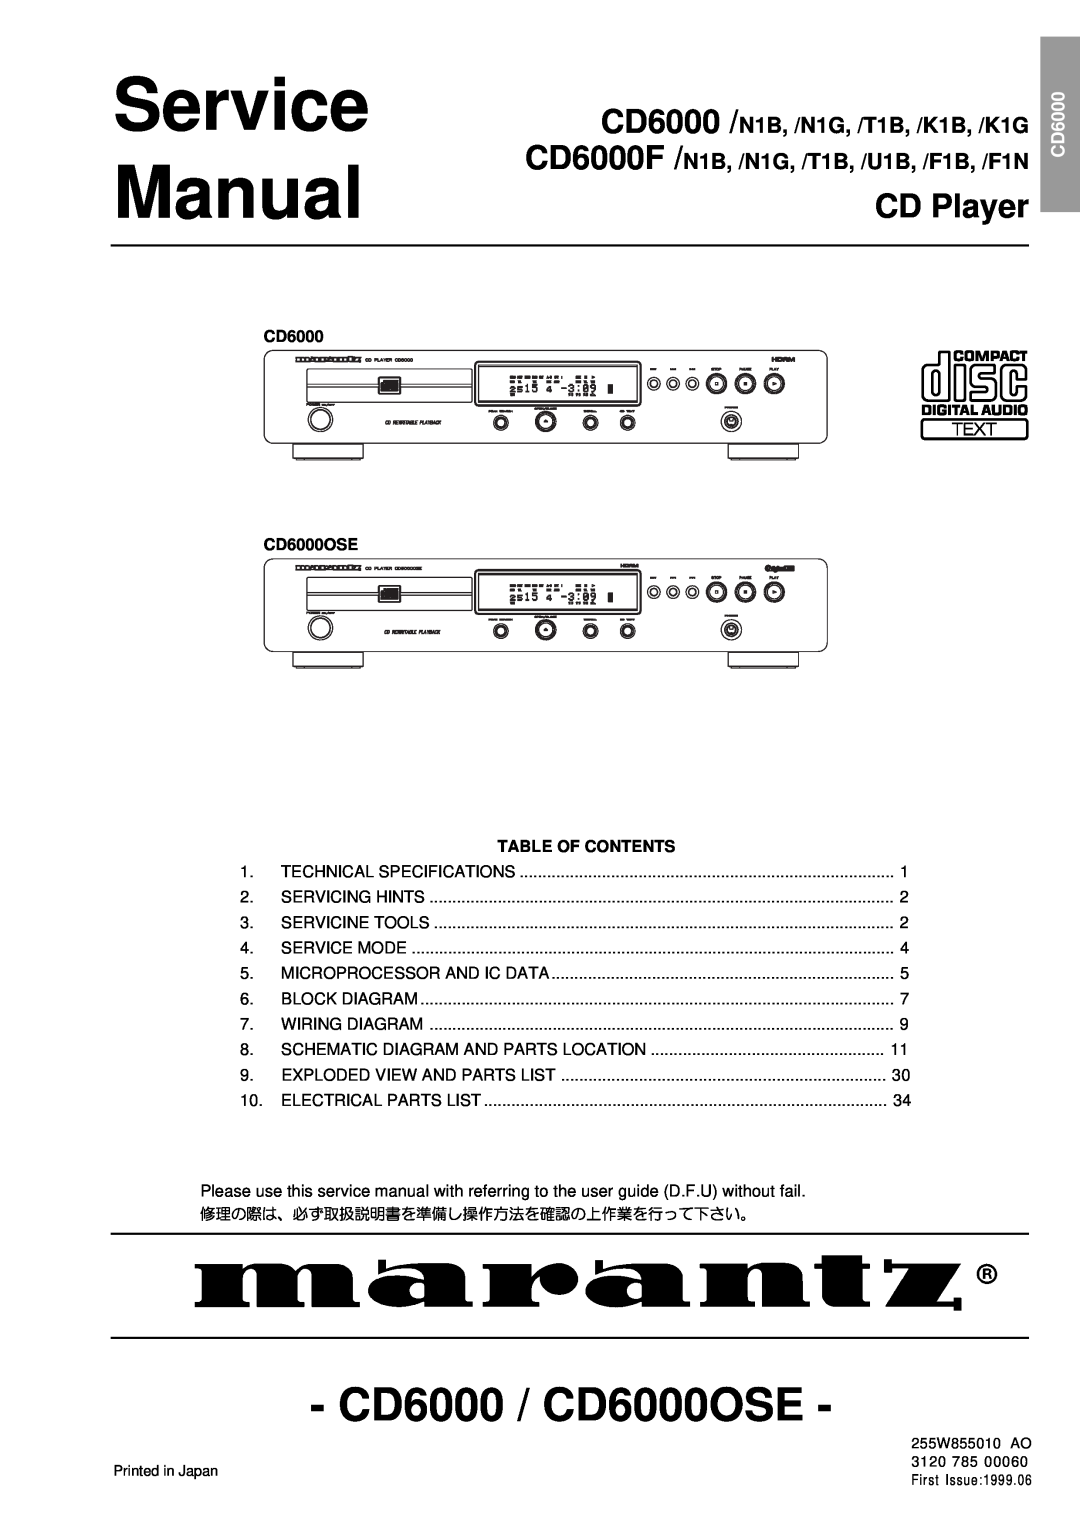 Marantz CD6000SE service manual CD6000 CD6000OSE, Table Of Contents, Service Manual, CD6000 / CD6000OSE, CD Player 